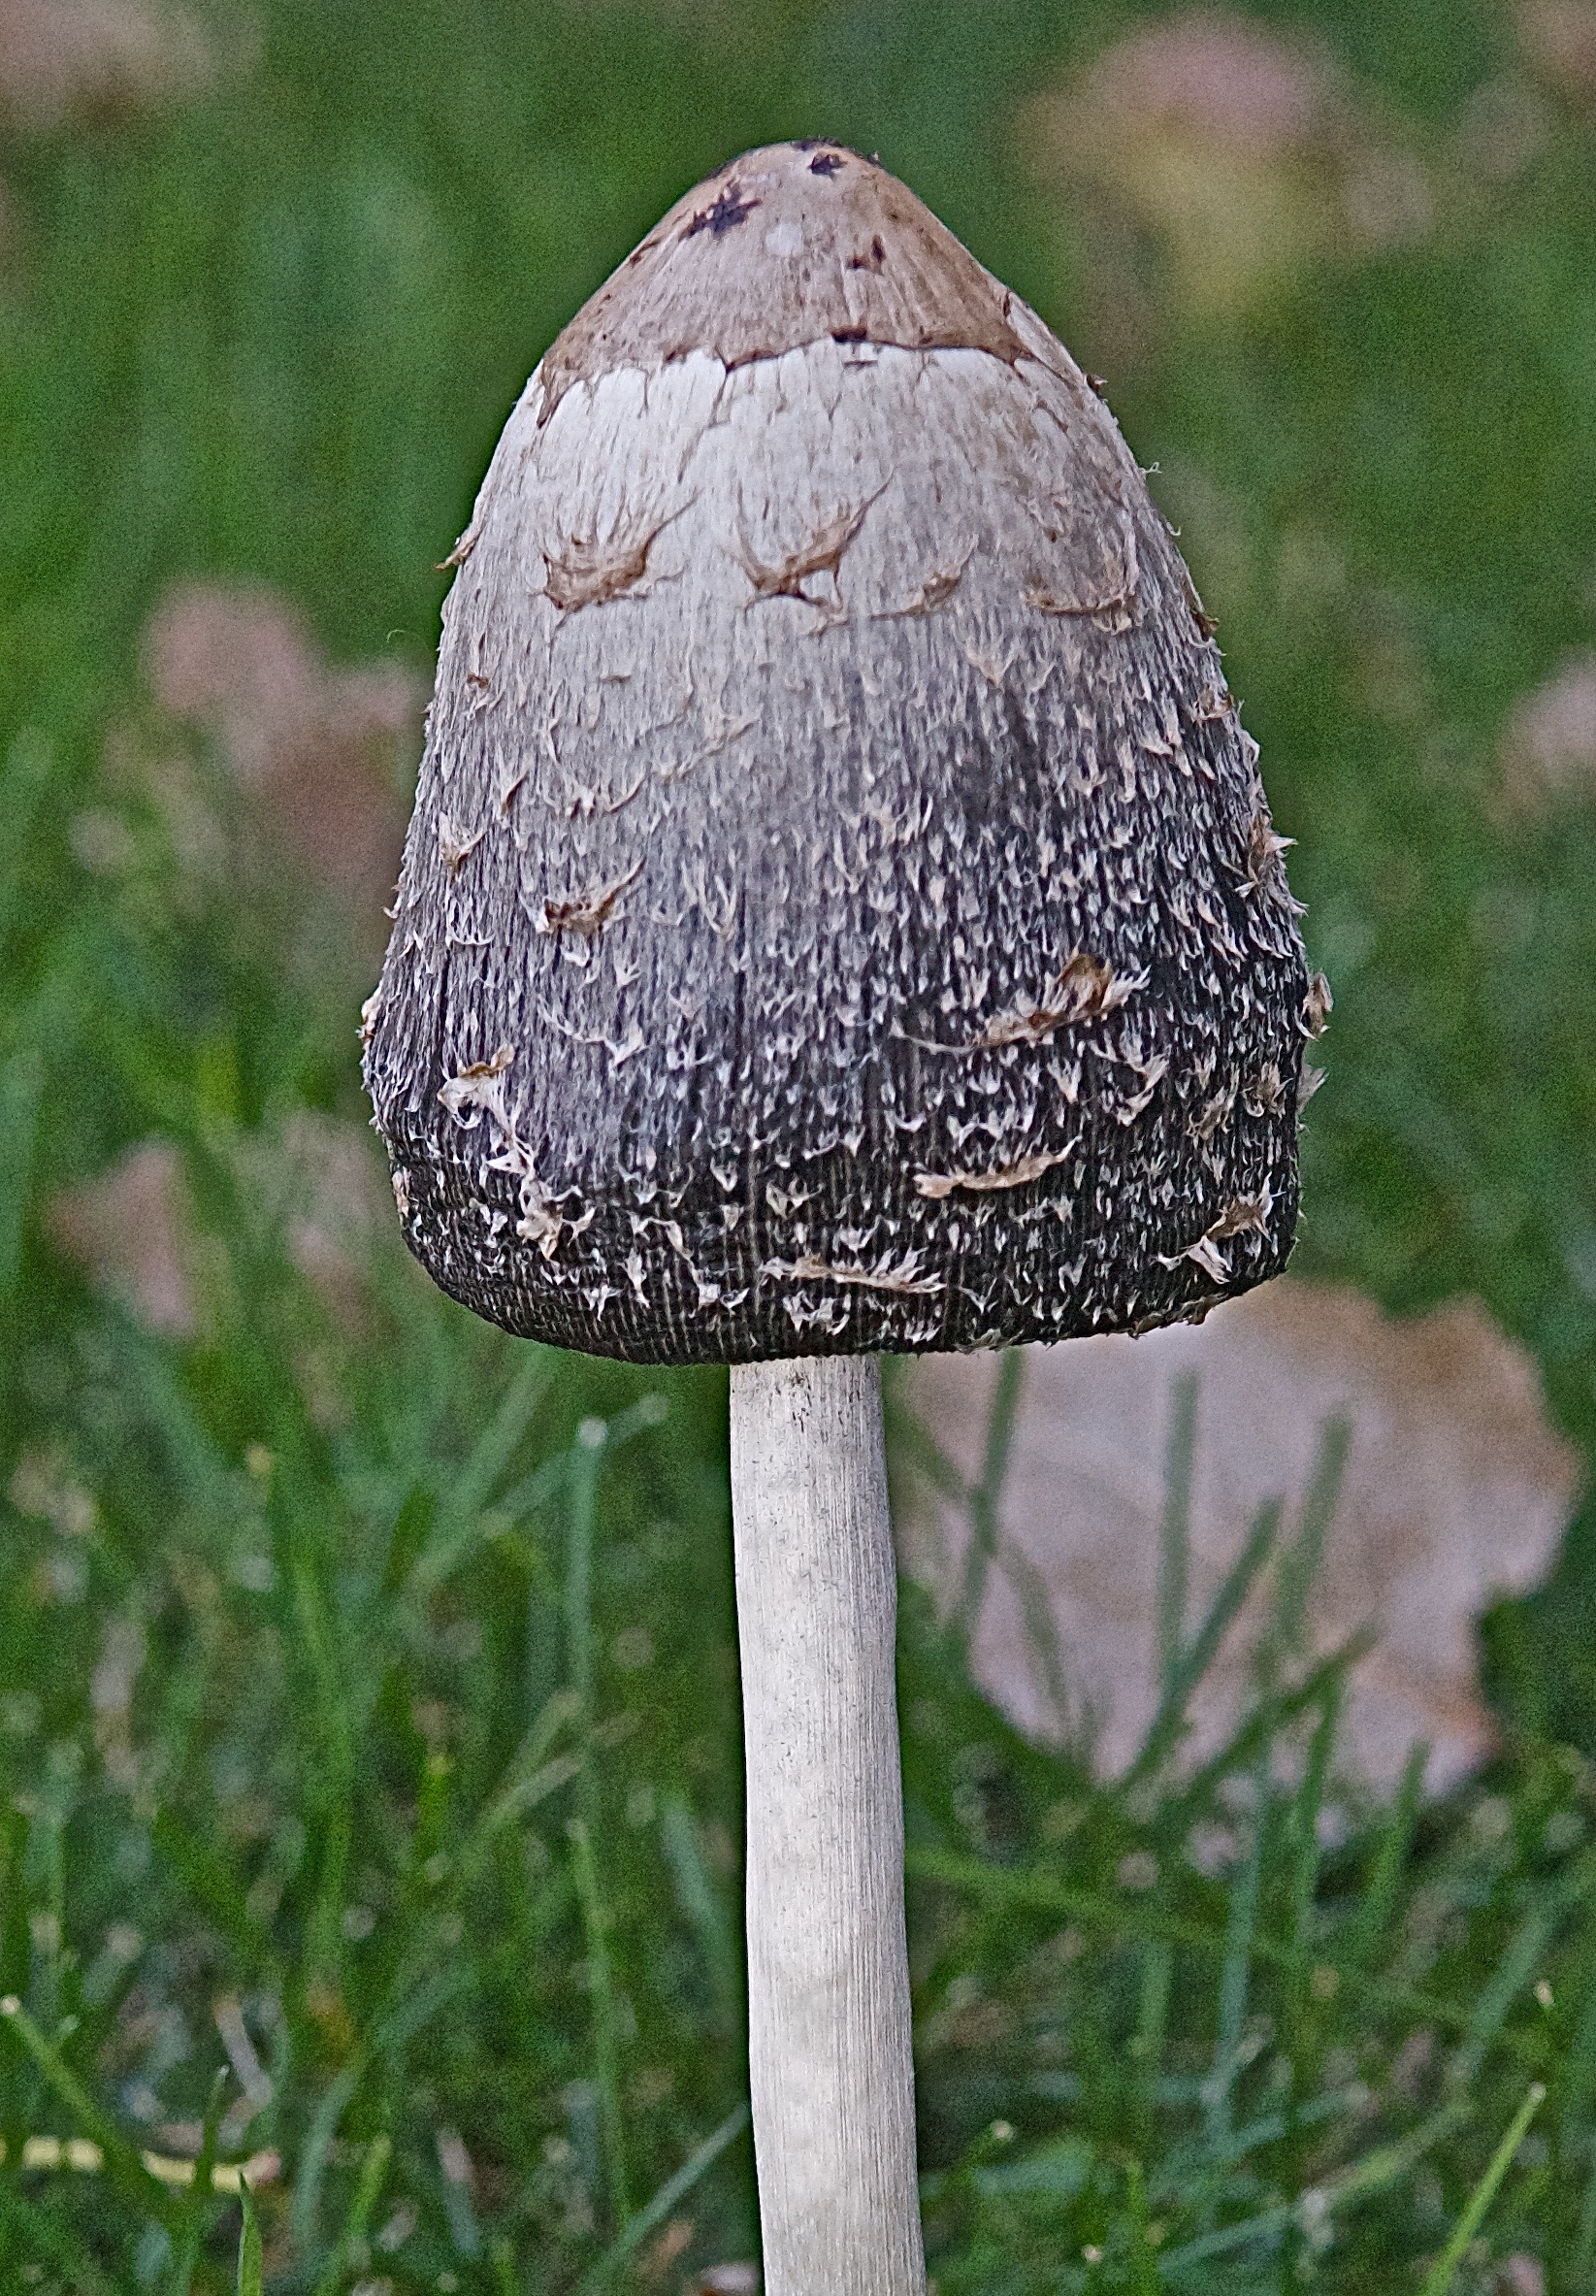 Shaggy Mane Mushroom (Coprinus Comatus) (day 2)